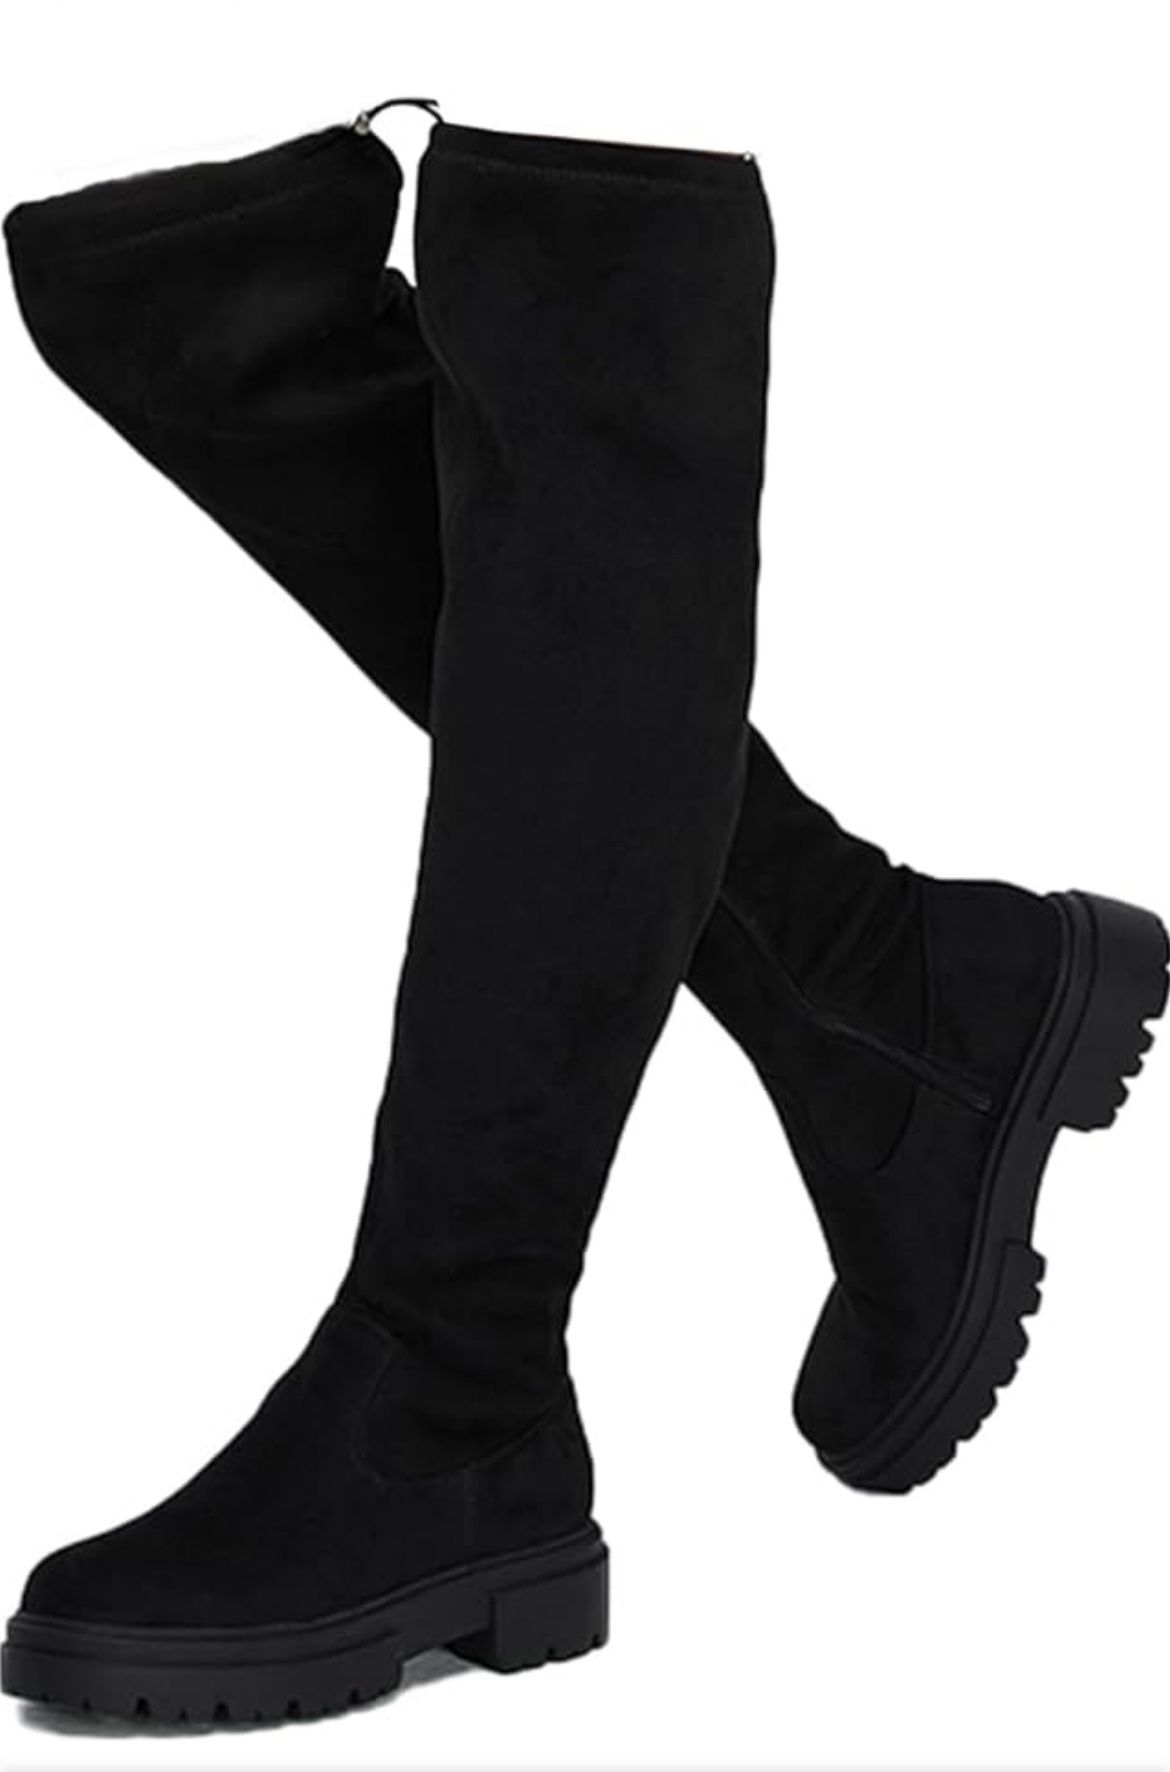 Women's Over the Knee High Boots Stretch Platform Block Heel Long Boots Wide Width Black Thigh High Boots